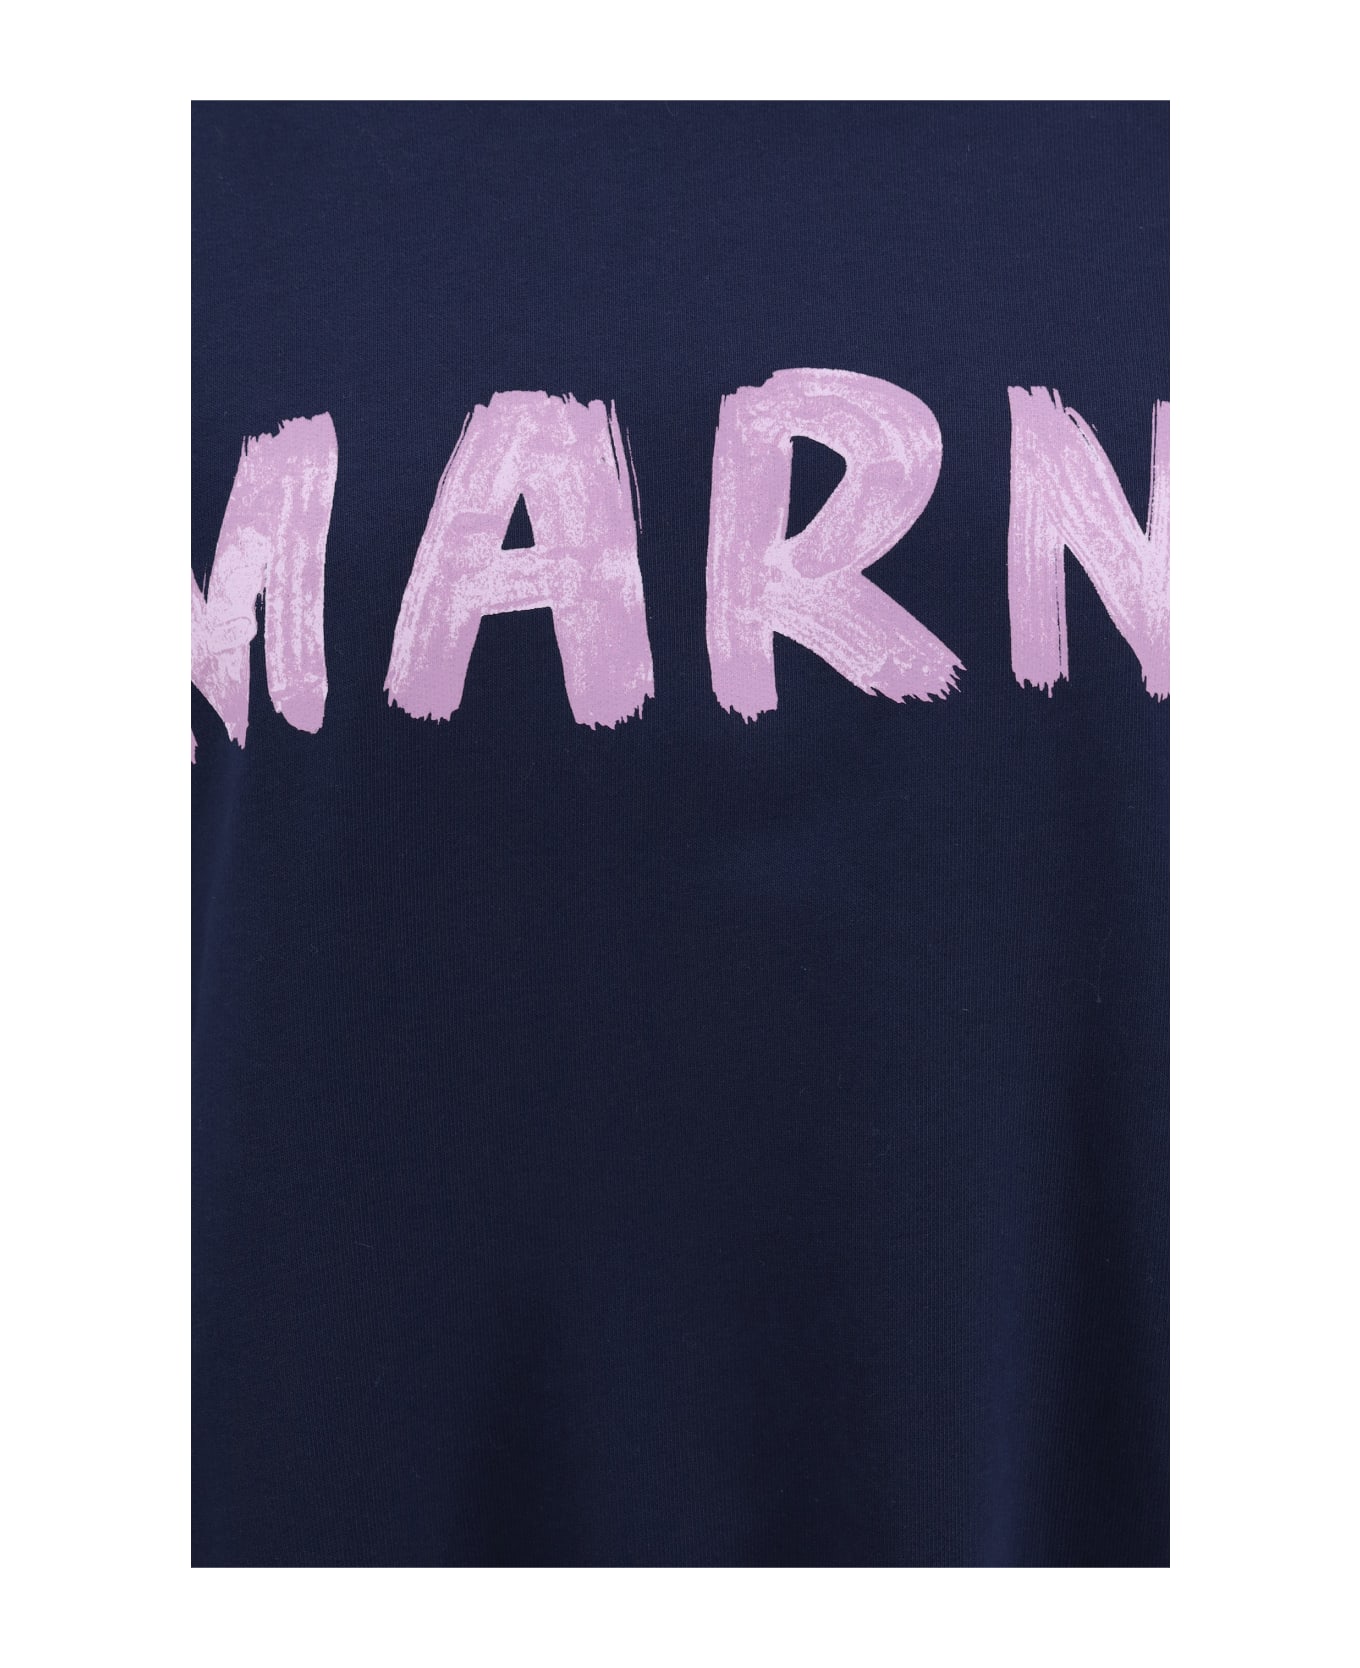 Marni Sweatshirt - Blu